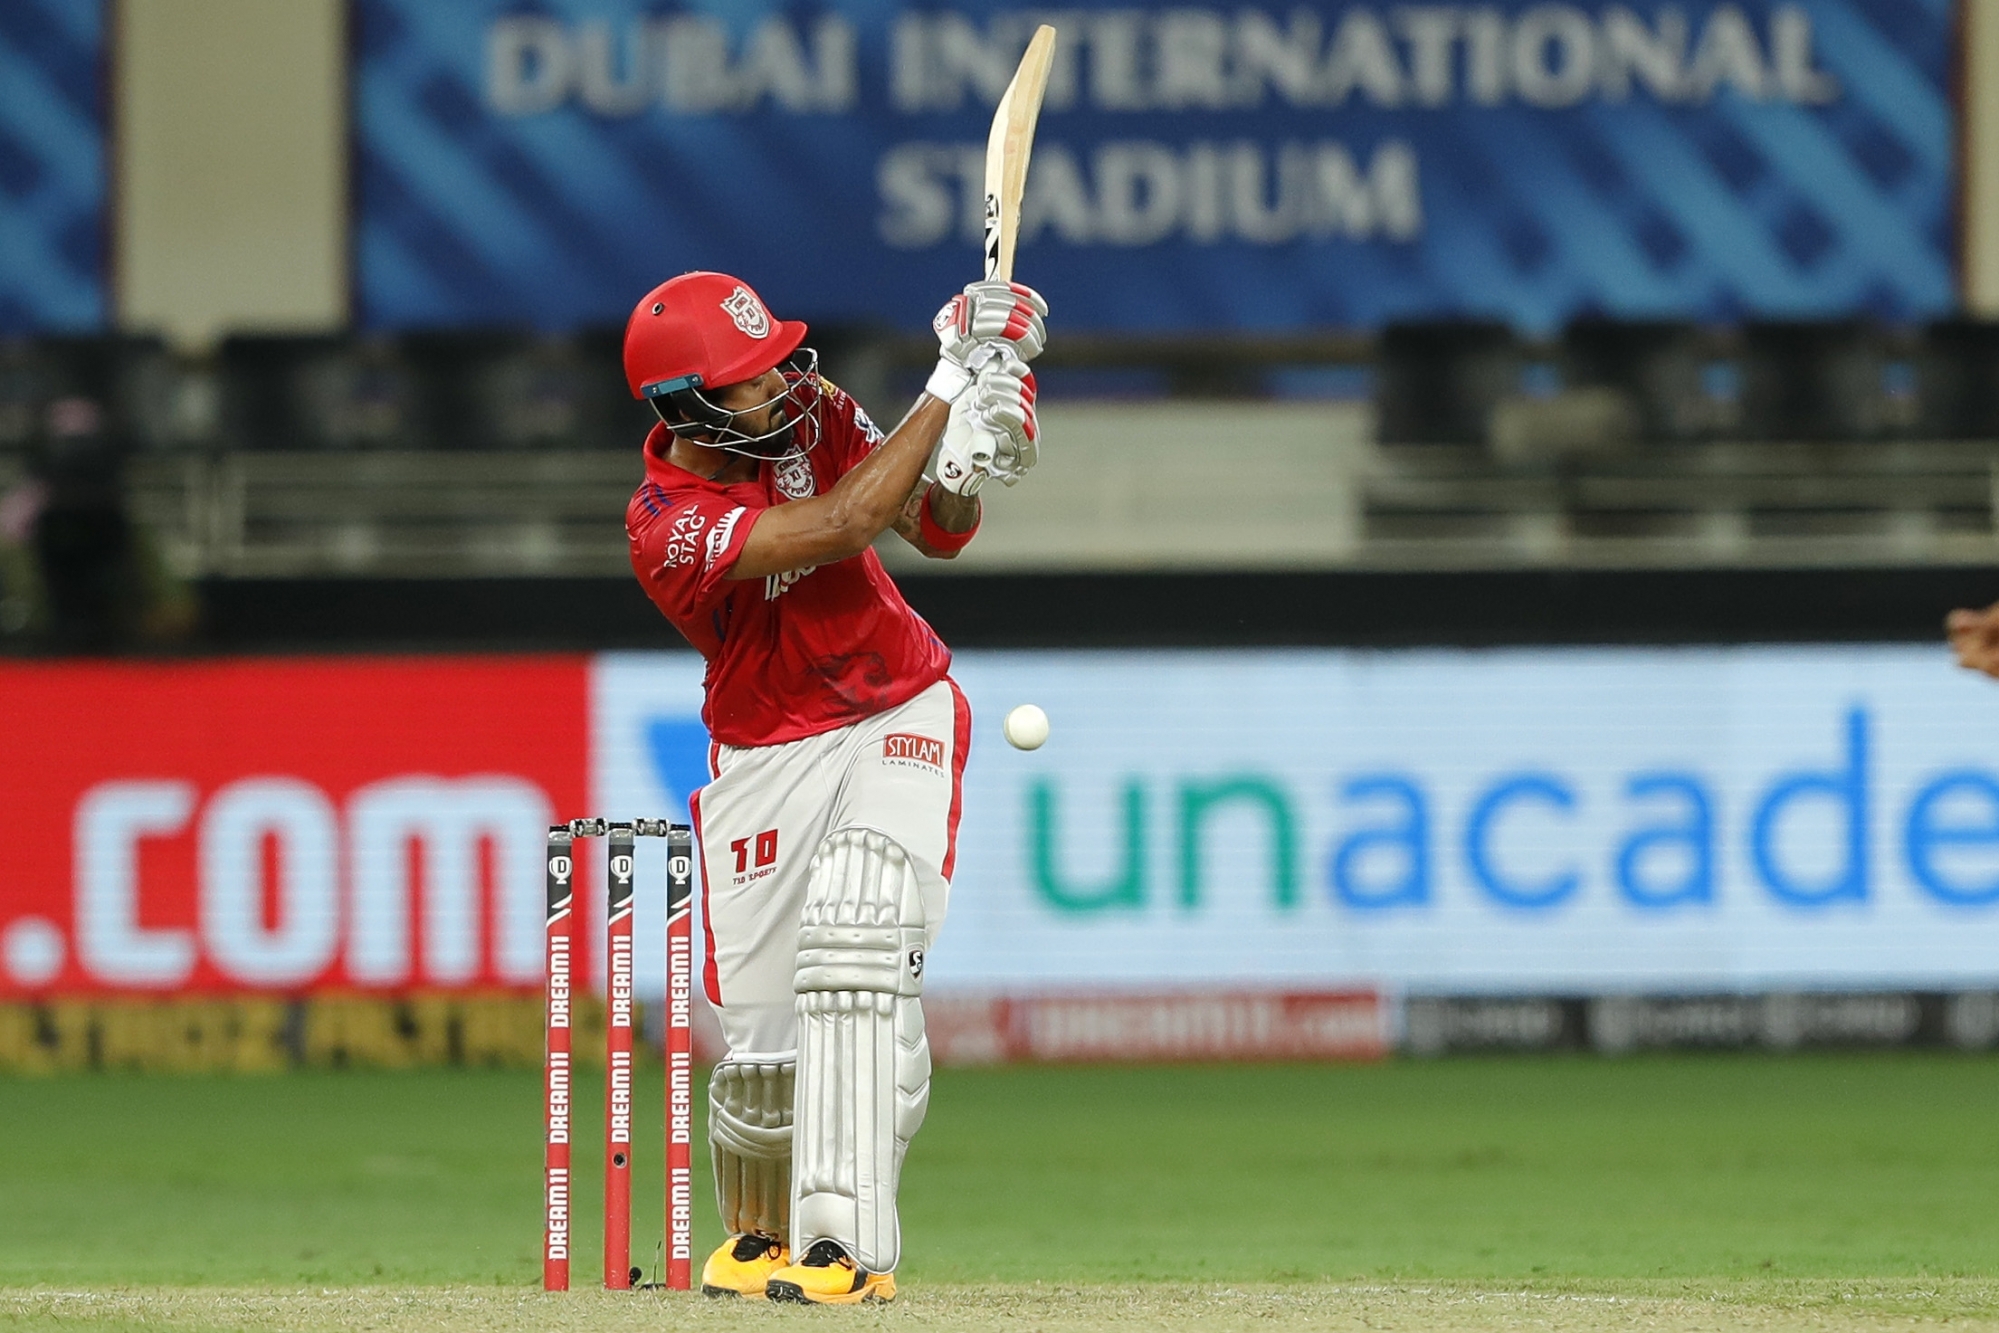 KL Rahul played a superb knock of 132* runs against RCB in Dubai (photo - IANS)